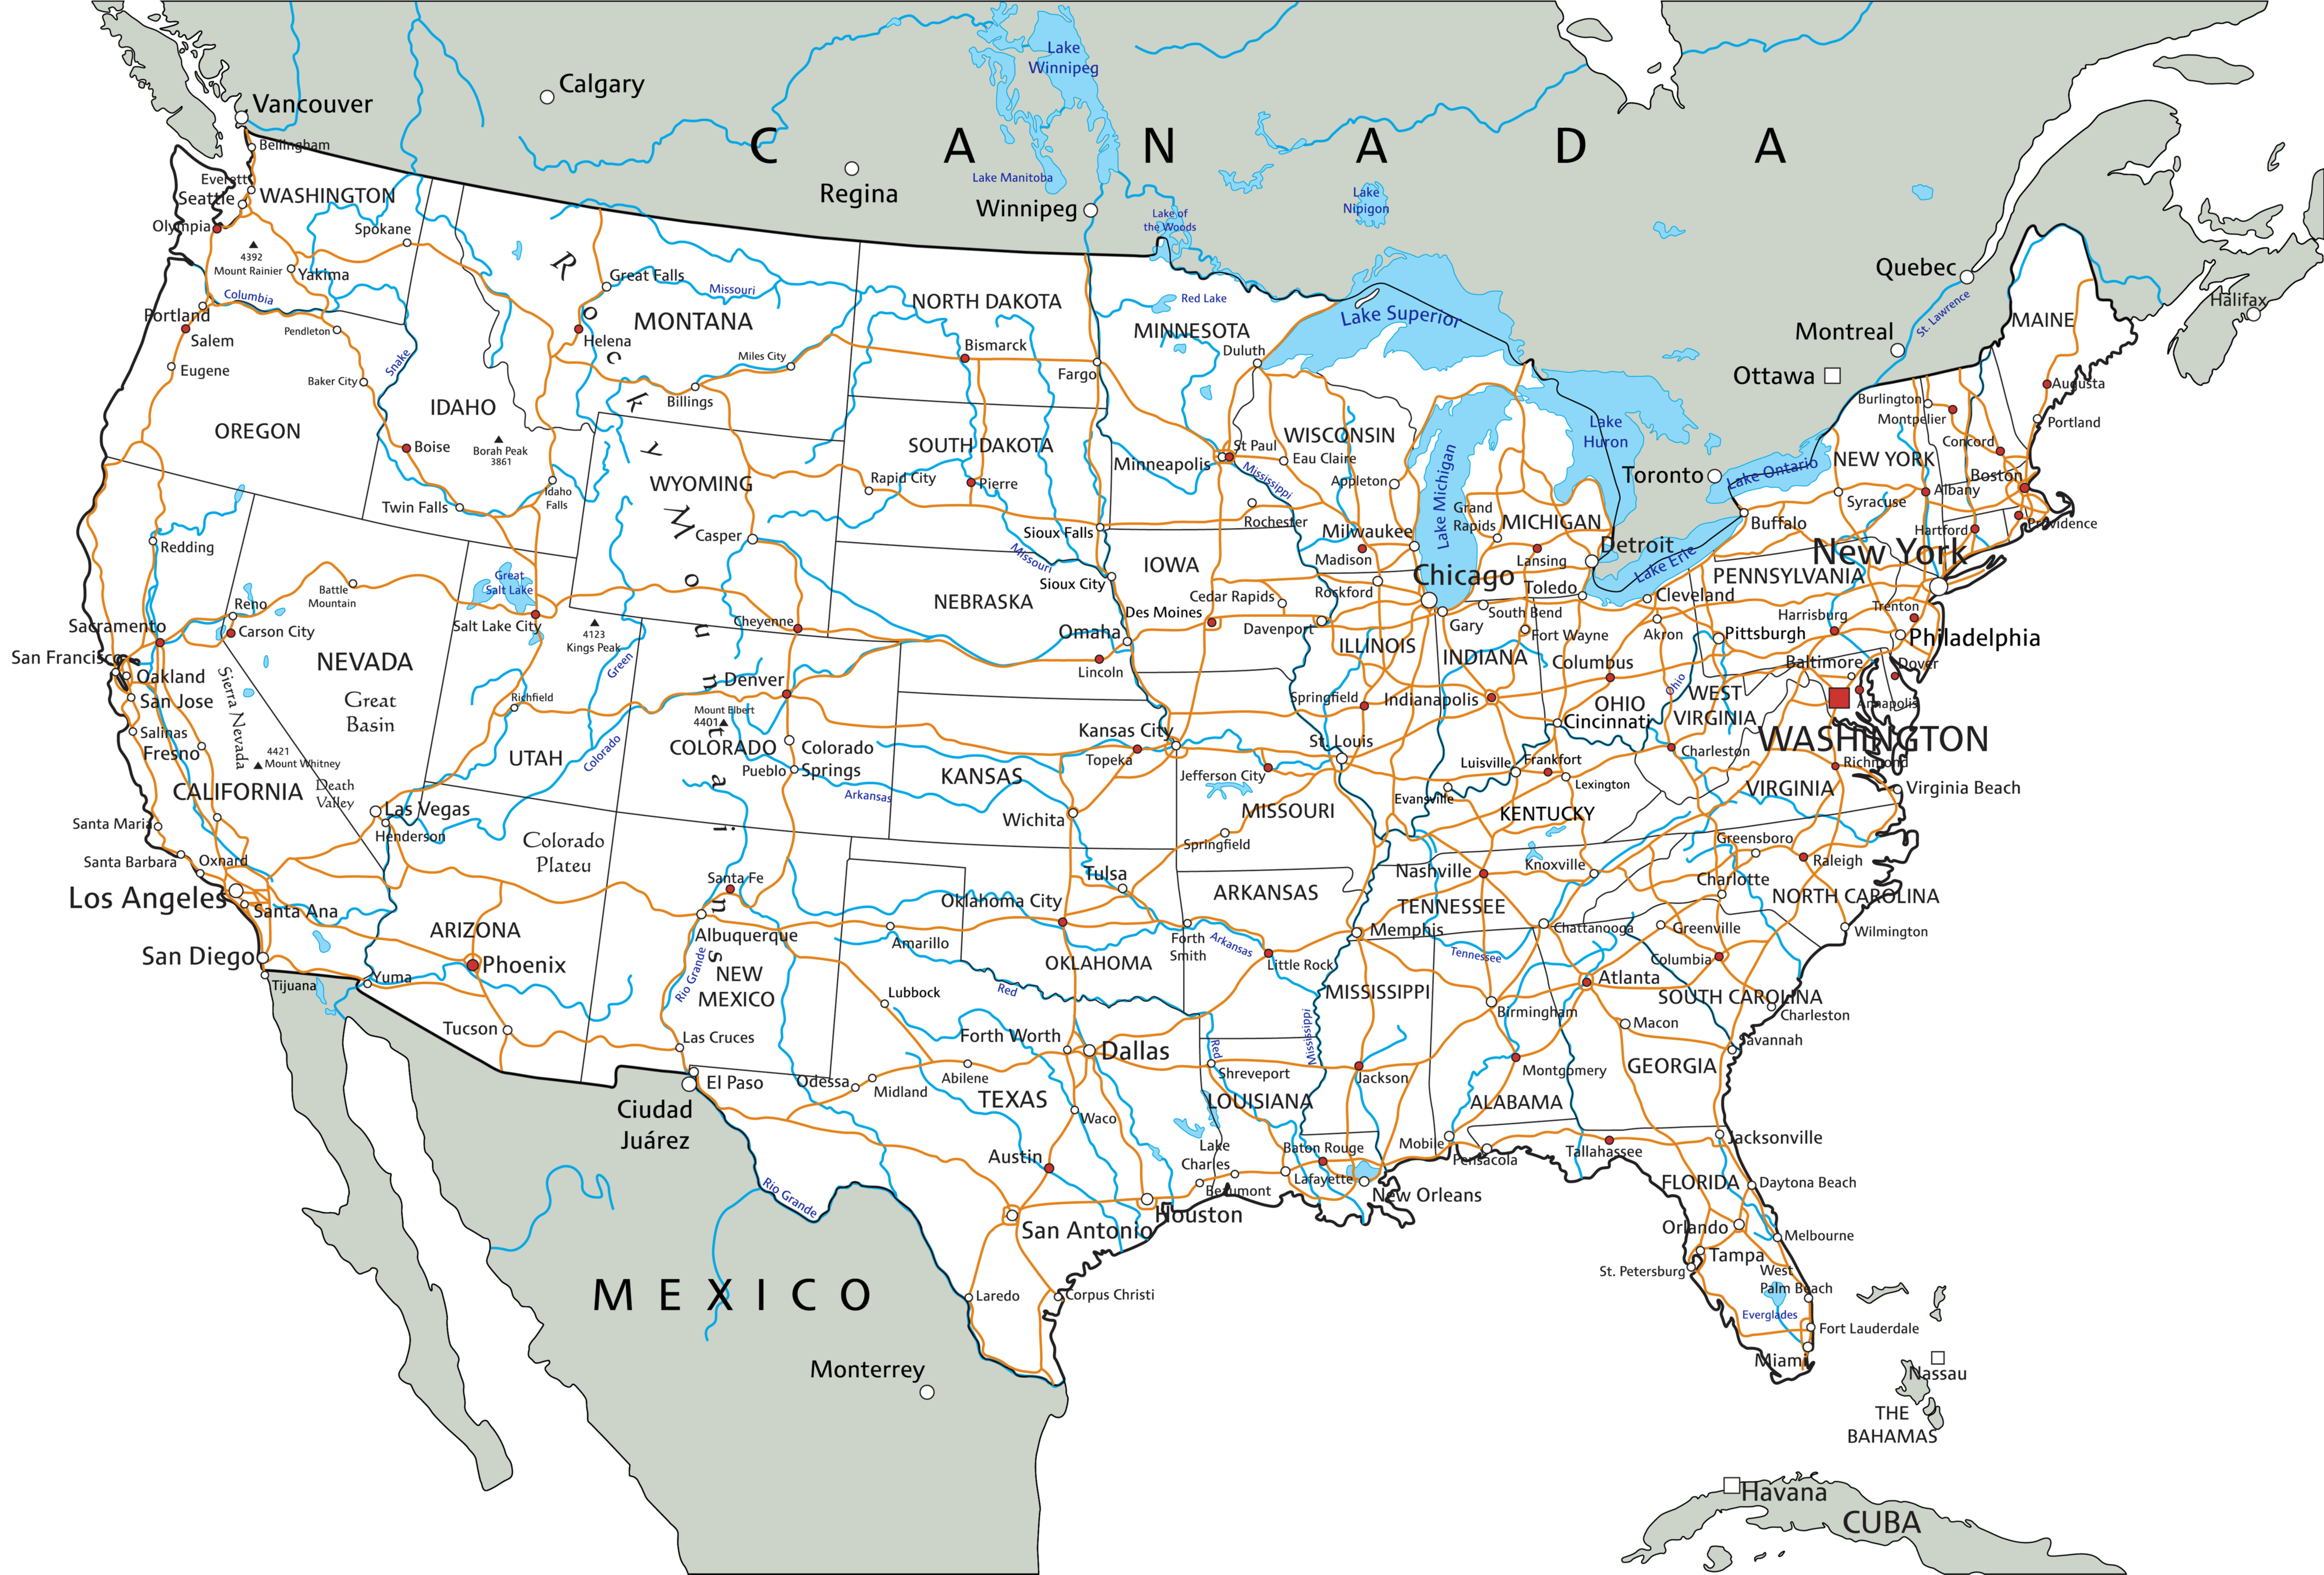 Capital Cities Of The United States - WorldAtlas